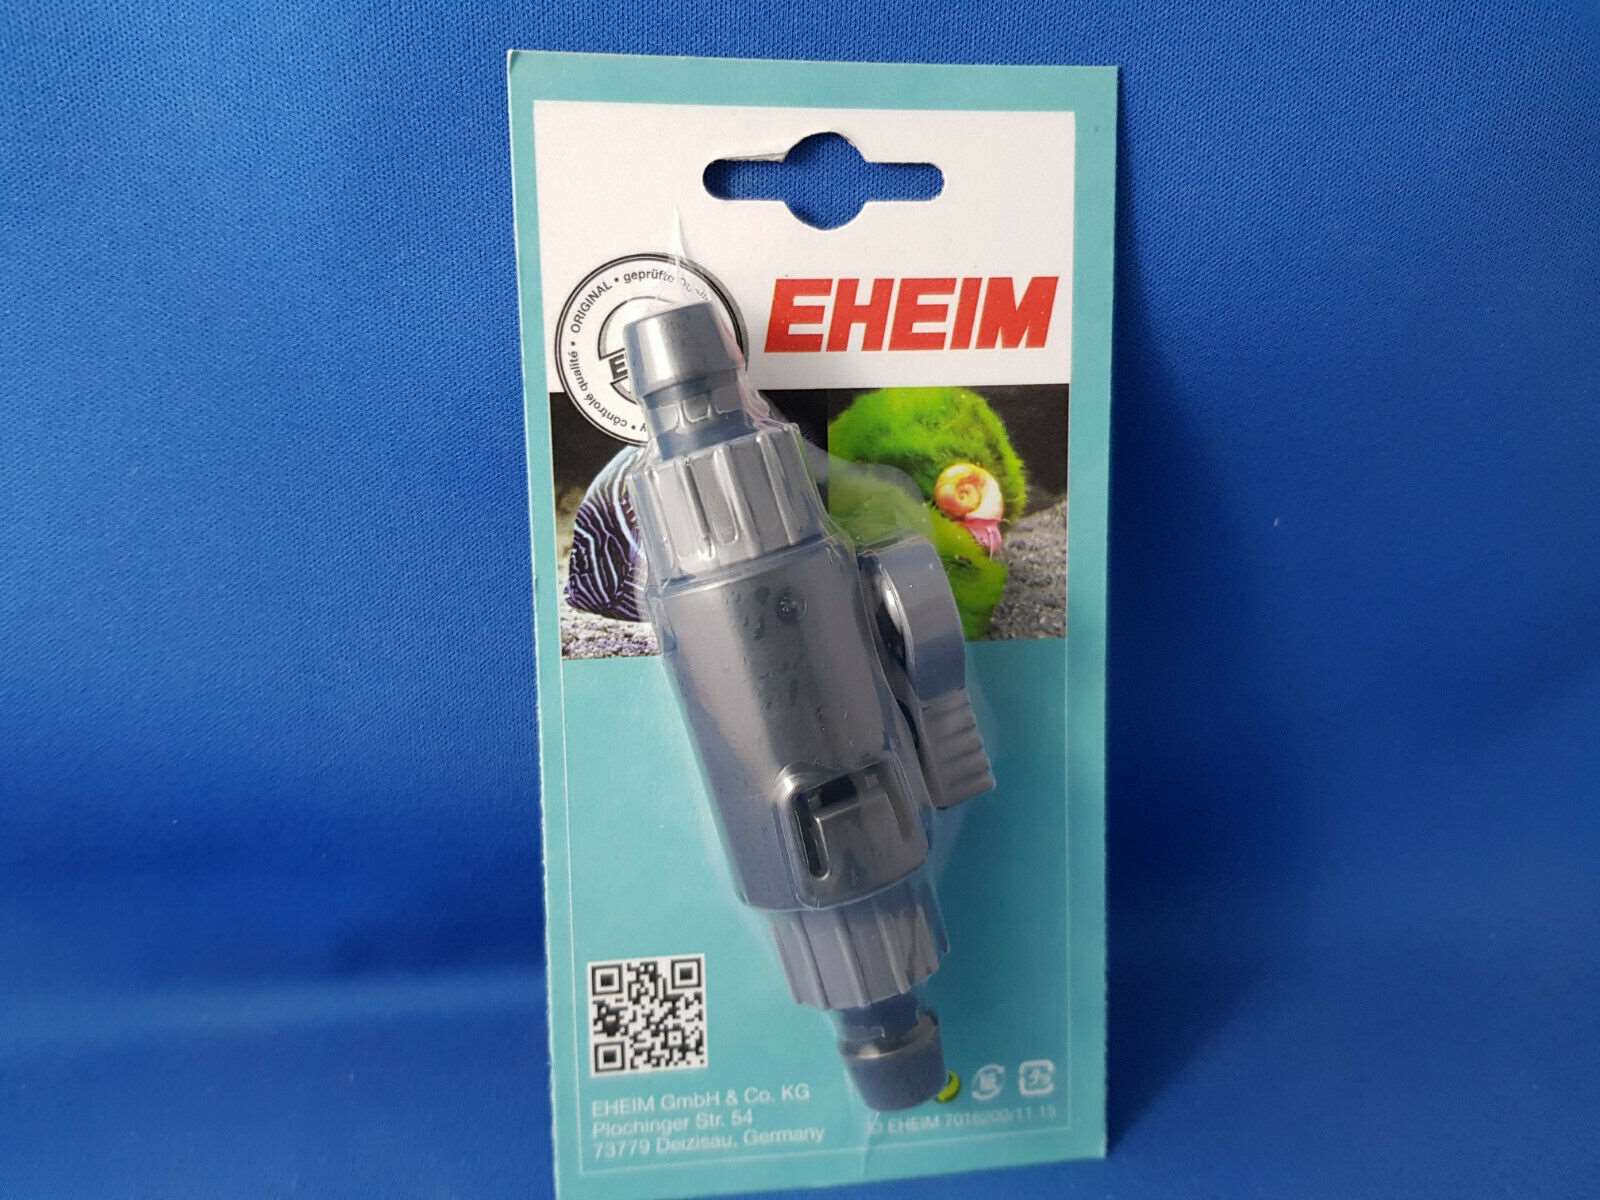 Eheim inline tap for 12/16 hose, part 4004512